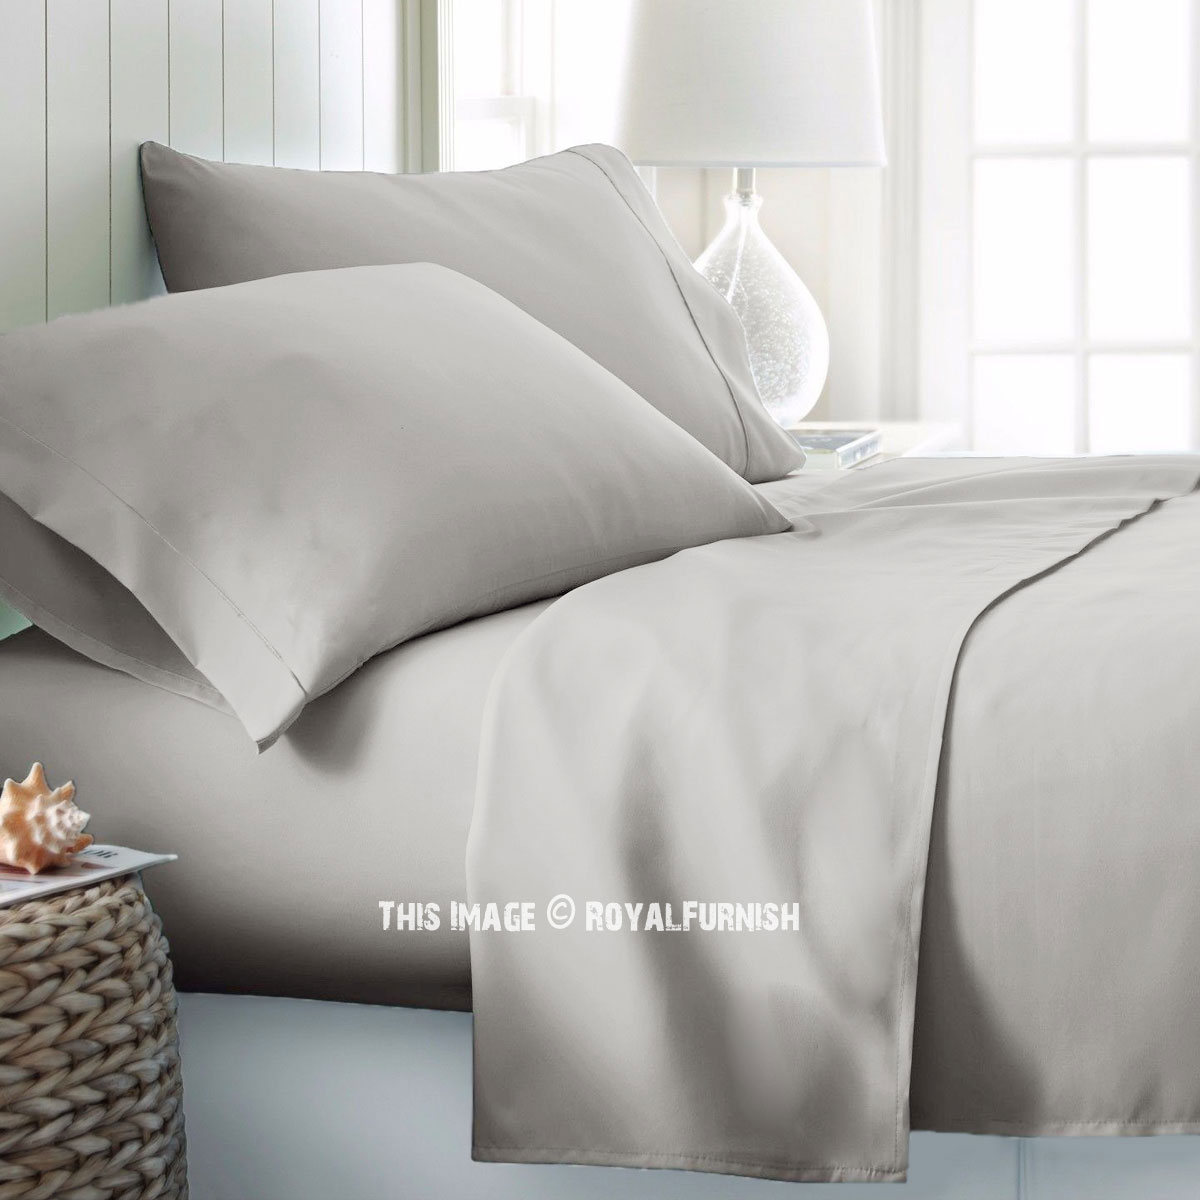 Light Grey 4pc Cotton Bed Sheet Set 1, Light Grey King Size Bed Sheet